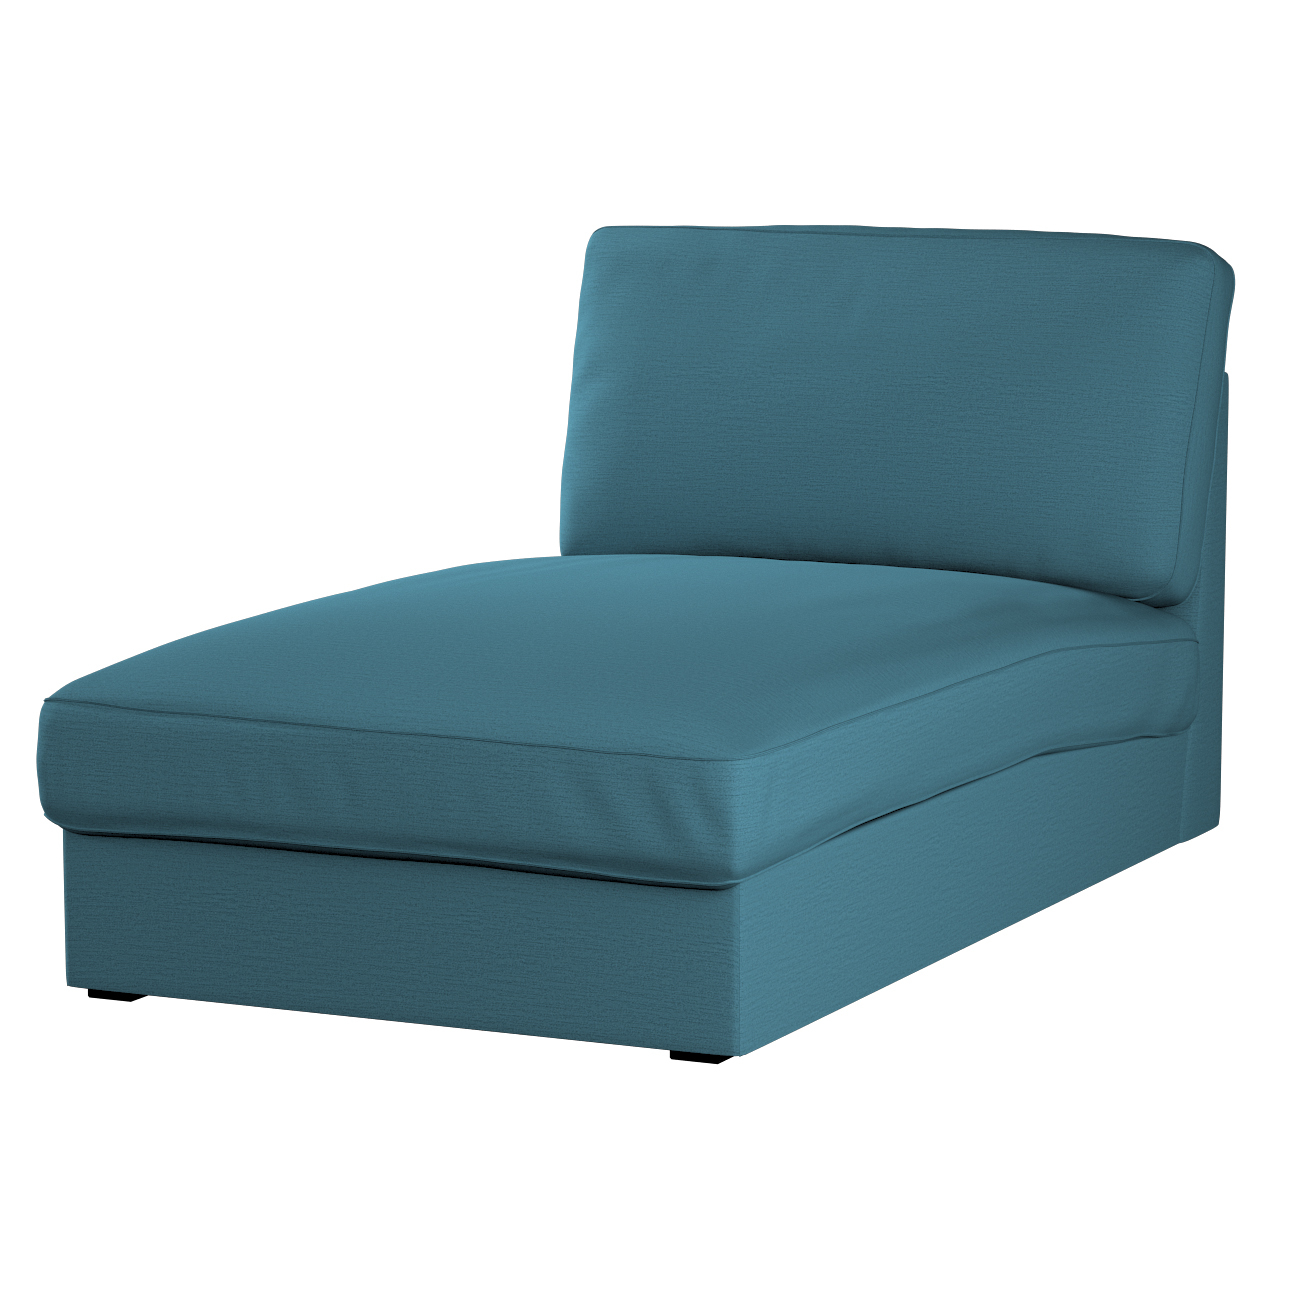 Bezug für Kivik Recamiere Sofa, dunkelblau, Bezug für Kivik Recamiere, Livi günstig online kaufen